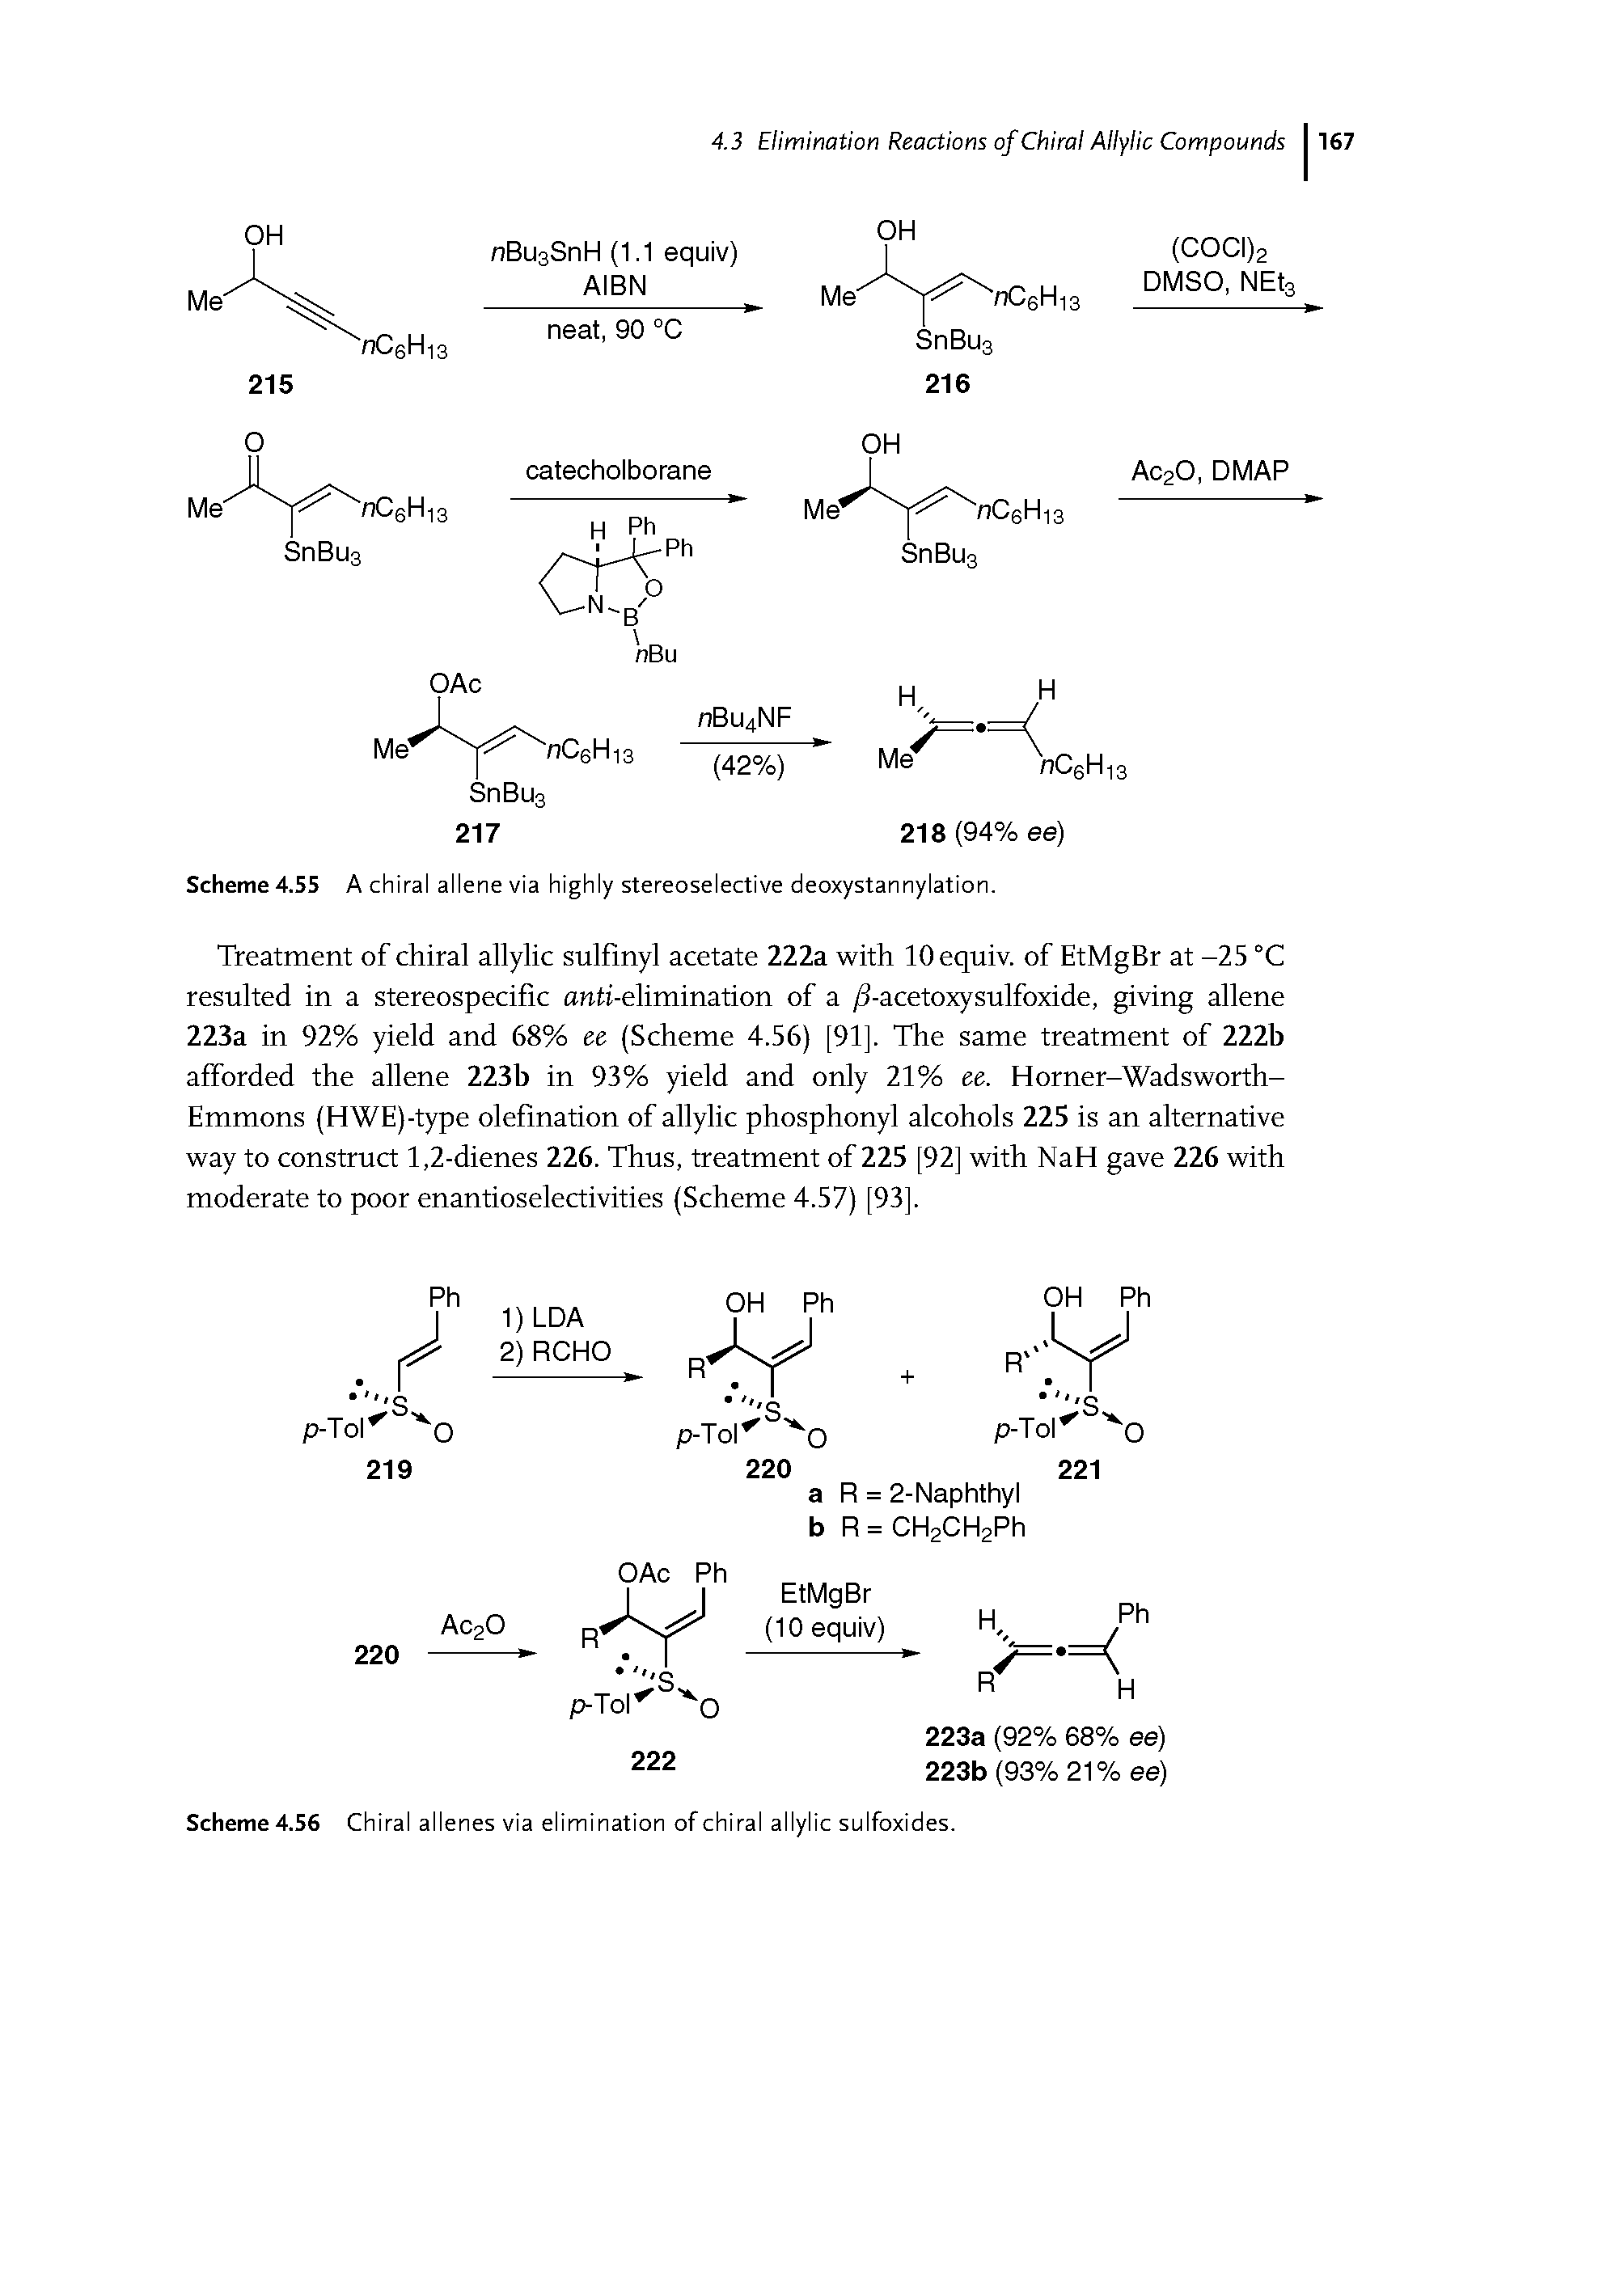 Scheme 4.56 Chiral allenes via elimination of chiral allylic sulfoxides.